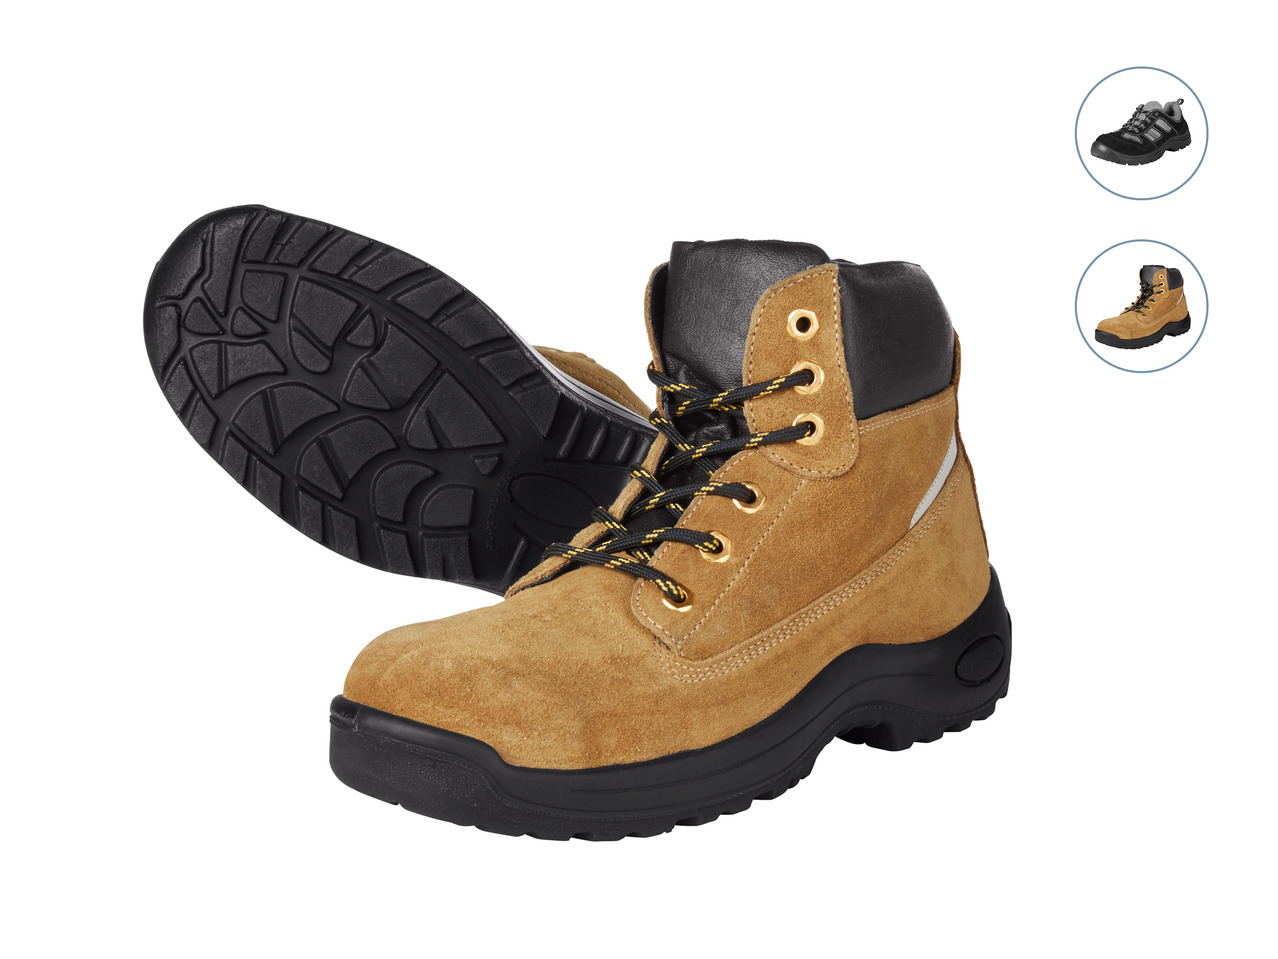 Powerfix Profi Men's Leather Safety Shoes or Boots1